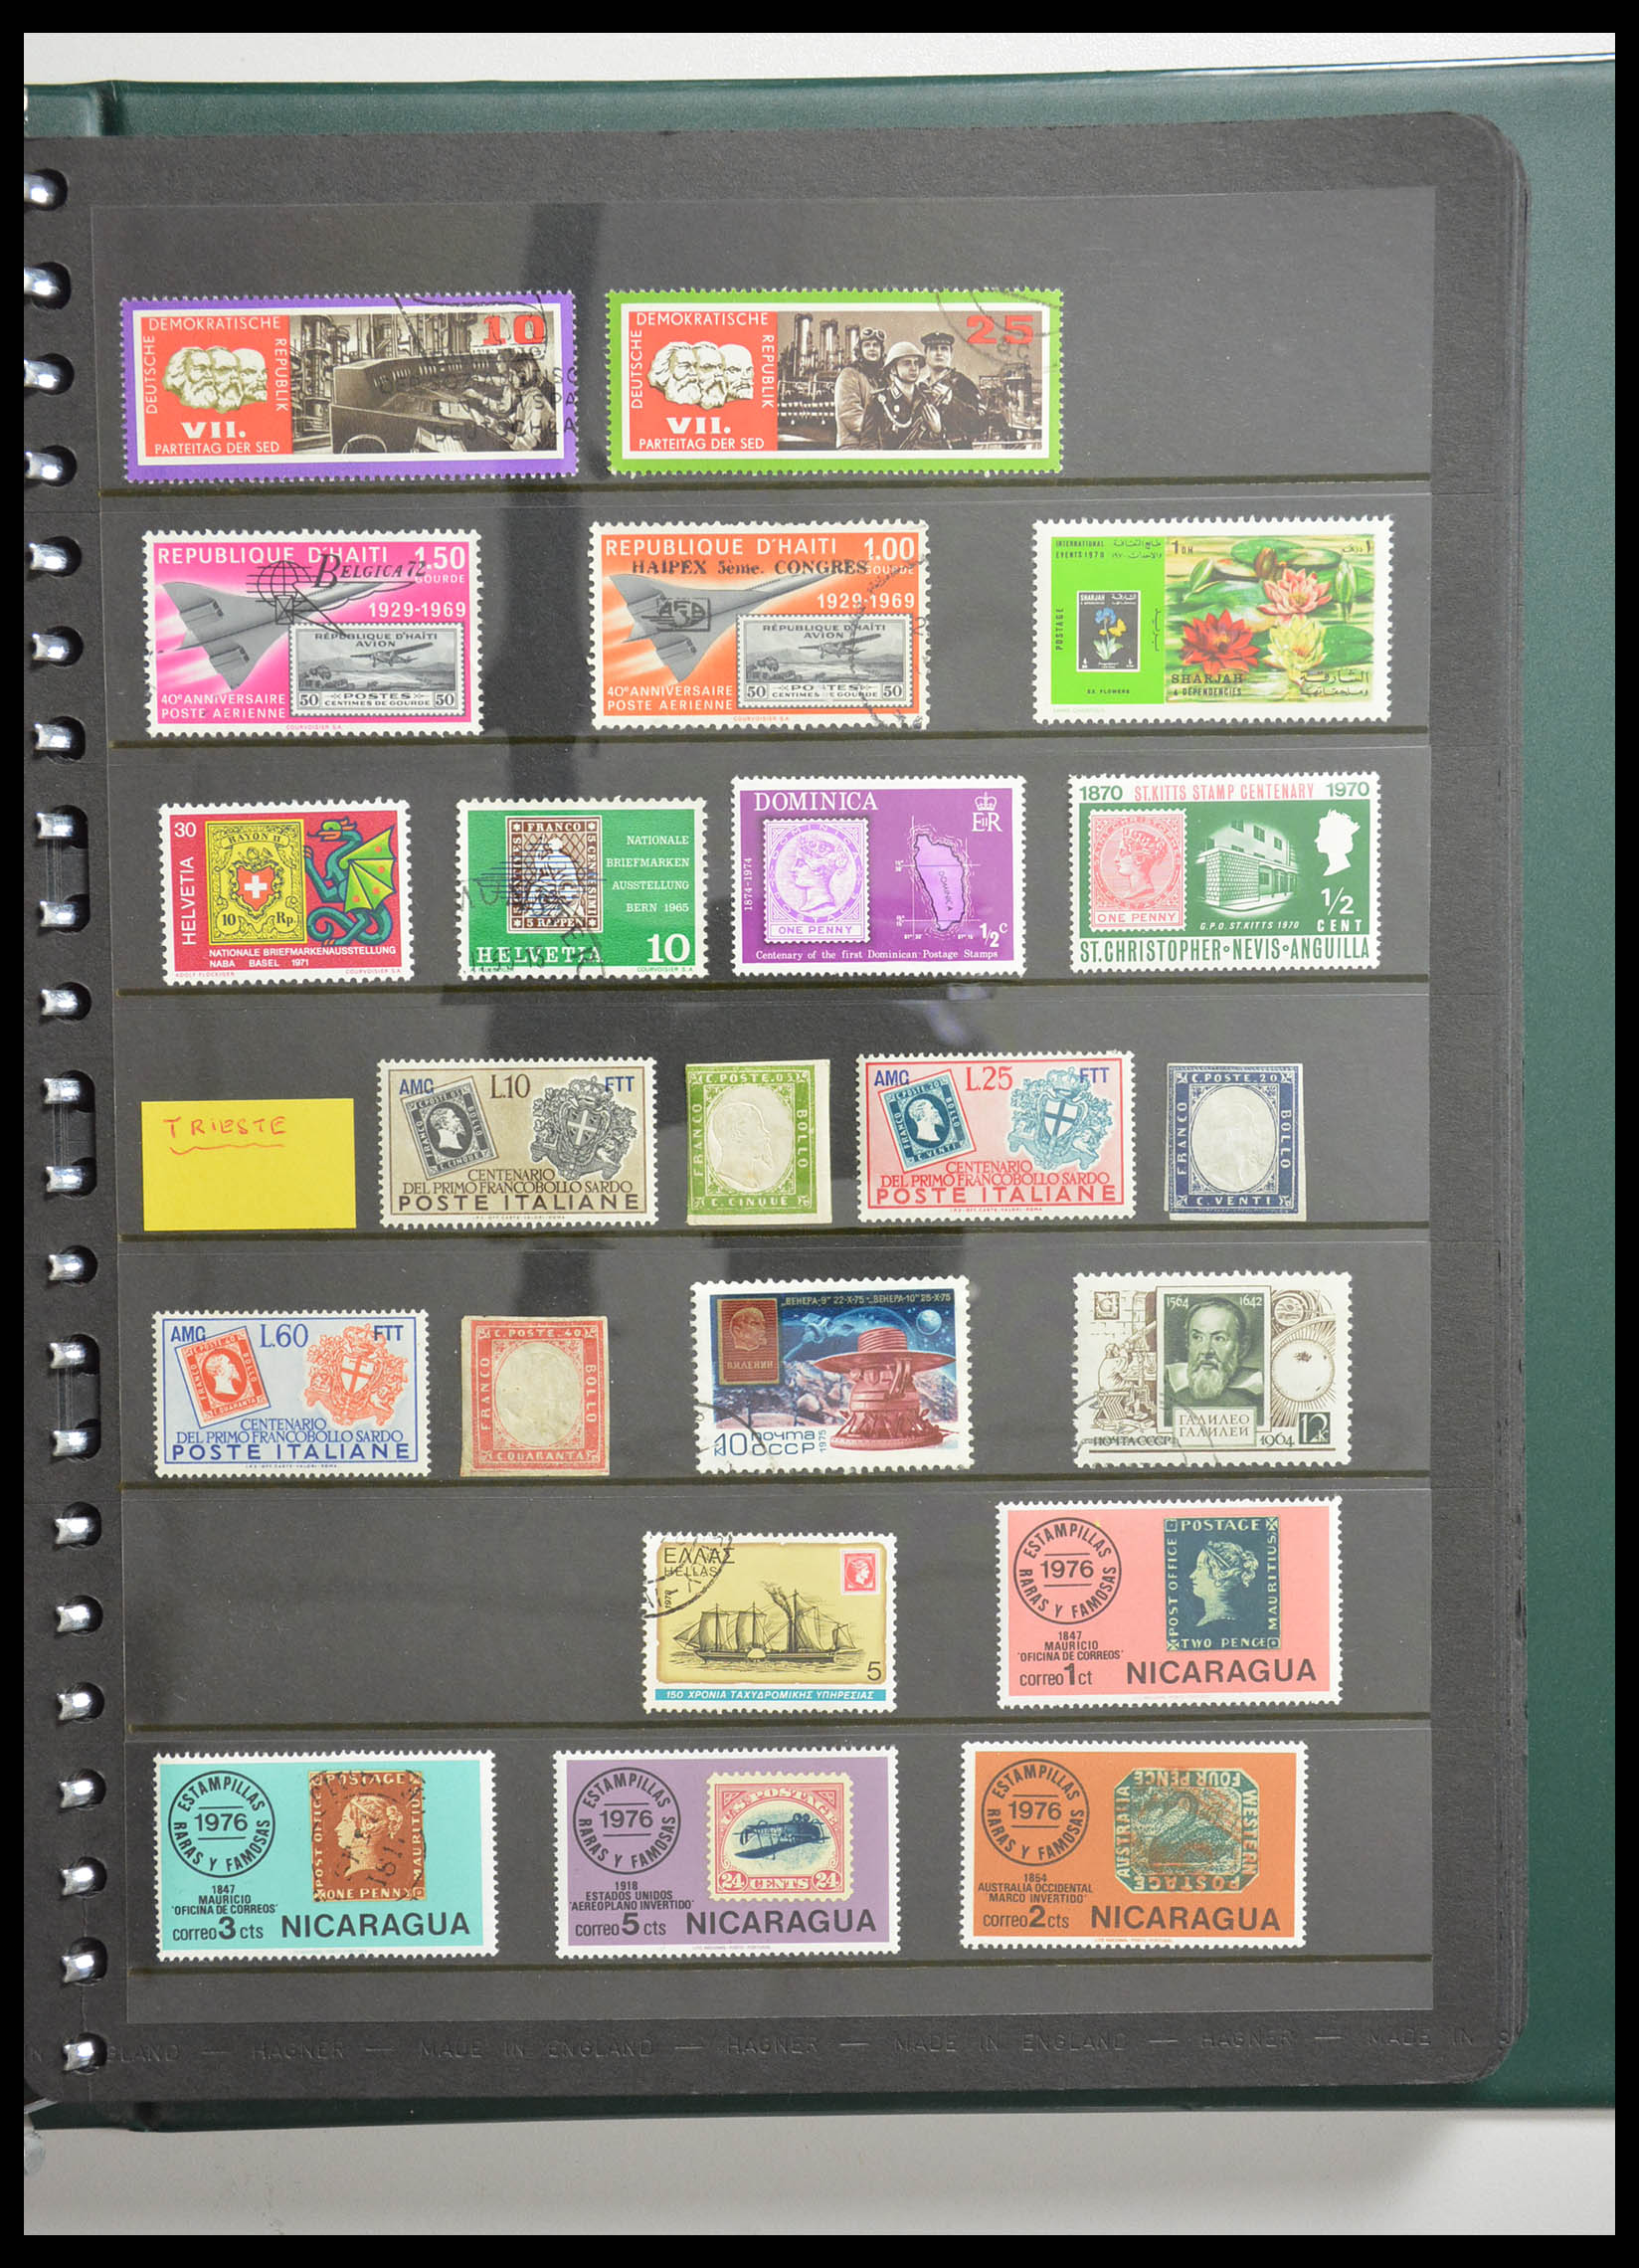 28337 012 - 28337 Postzegel op postzegel 1840-2001.